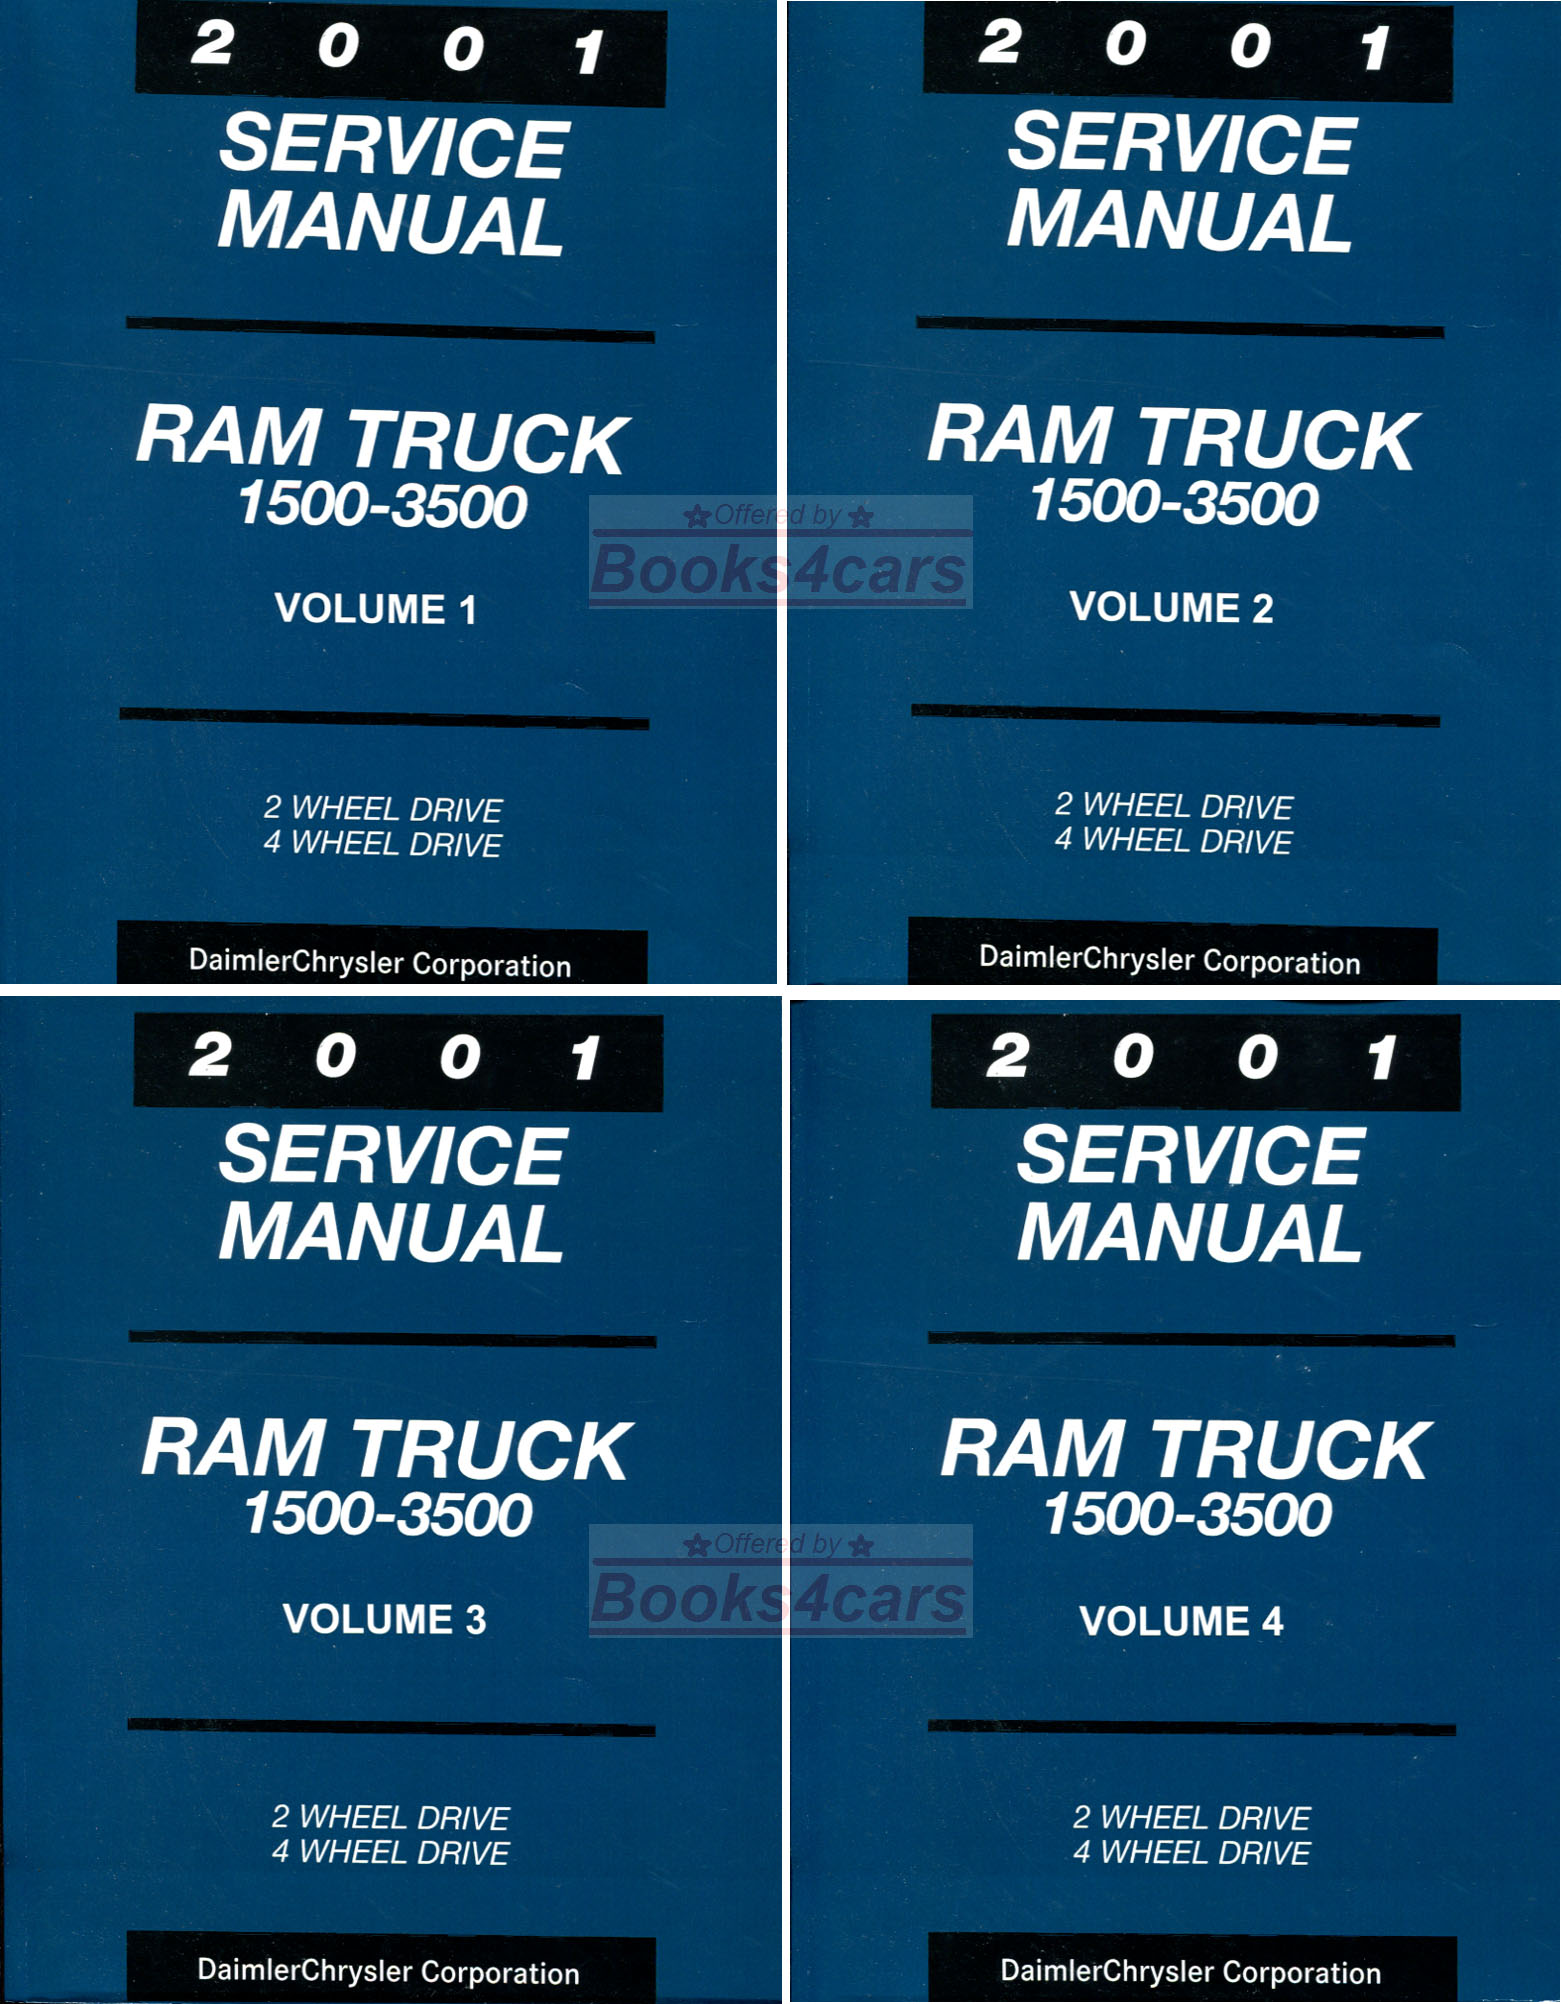 2001 Ram Truck Shop Service Repair Manual by Dodge includes Turbo Diesel 1500 2500 & 3500